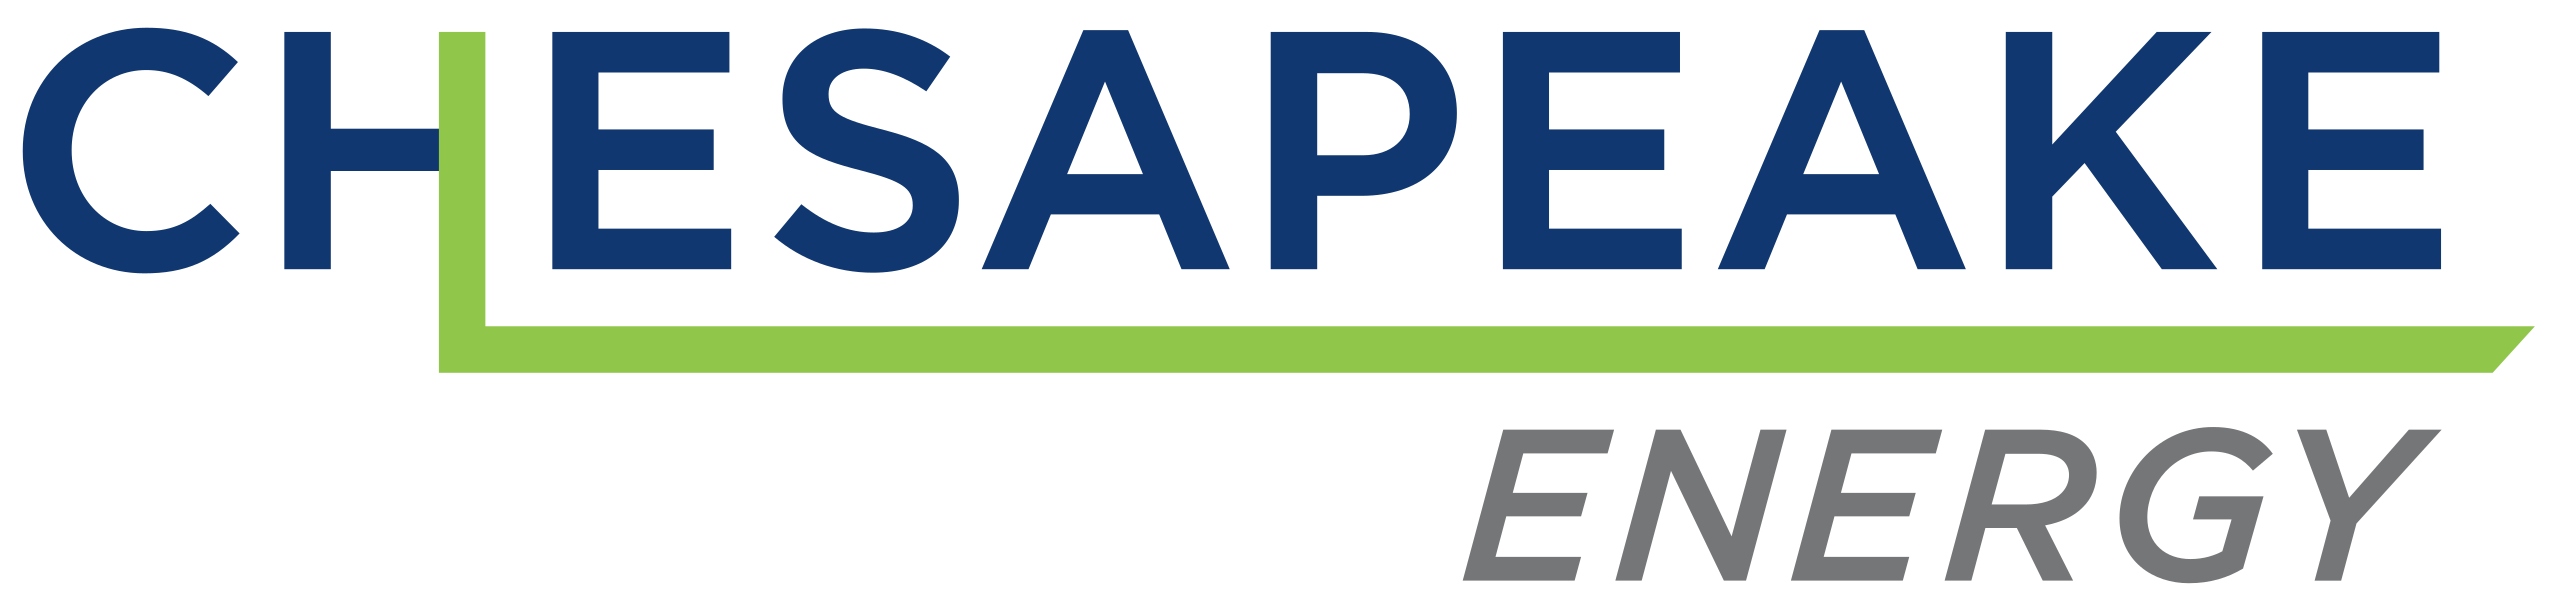 2560px-Chesapeake Energy logo.svg